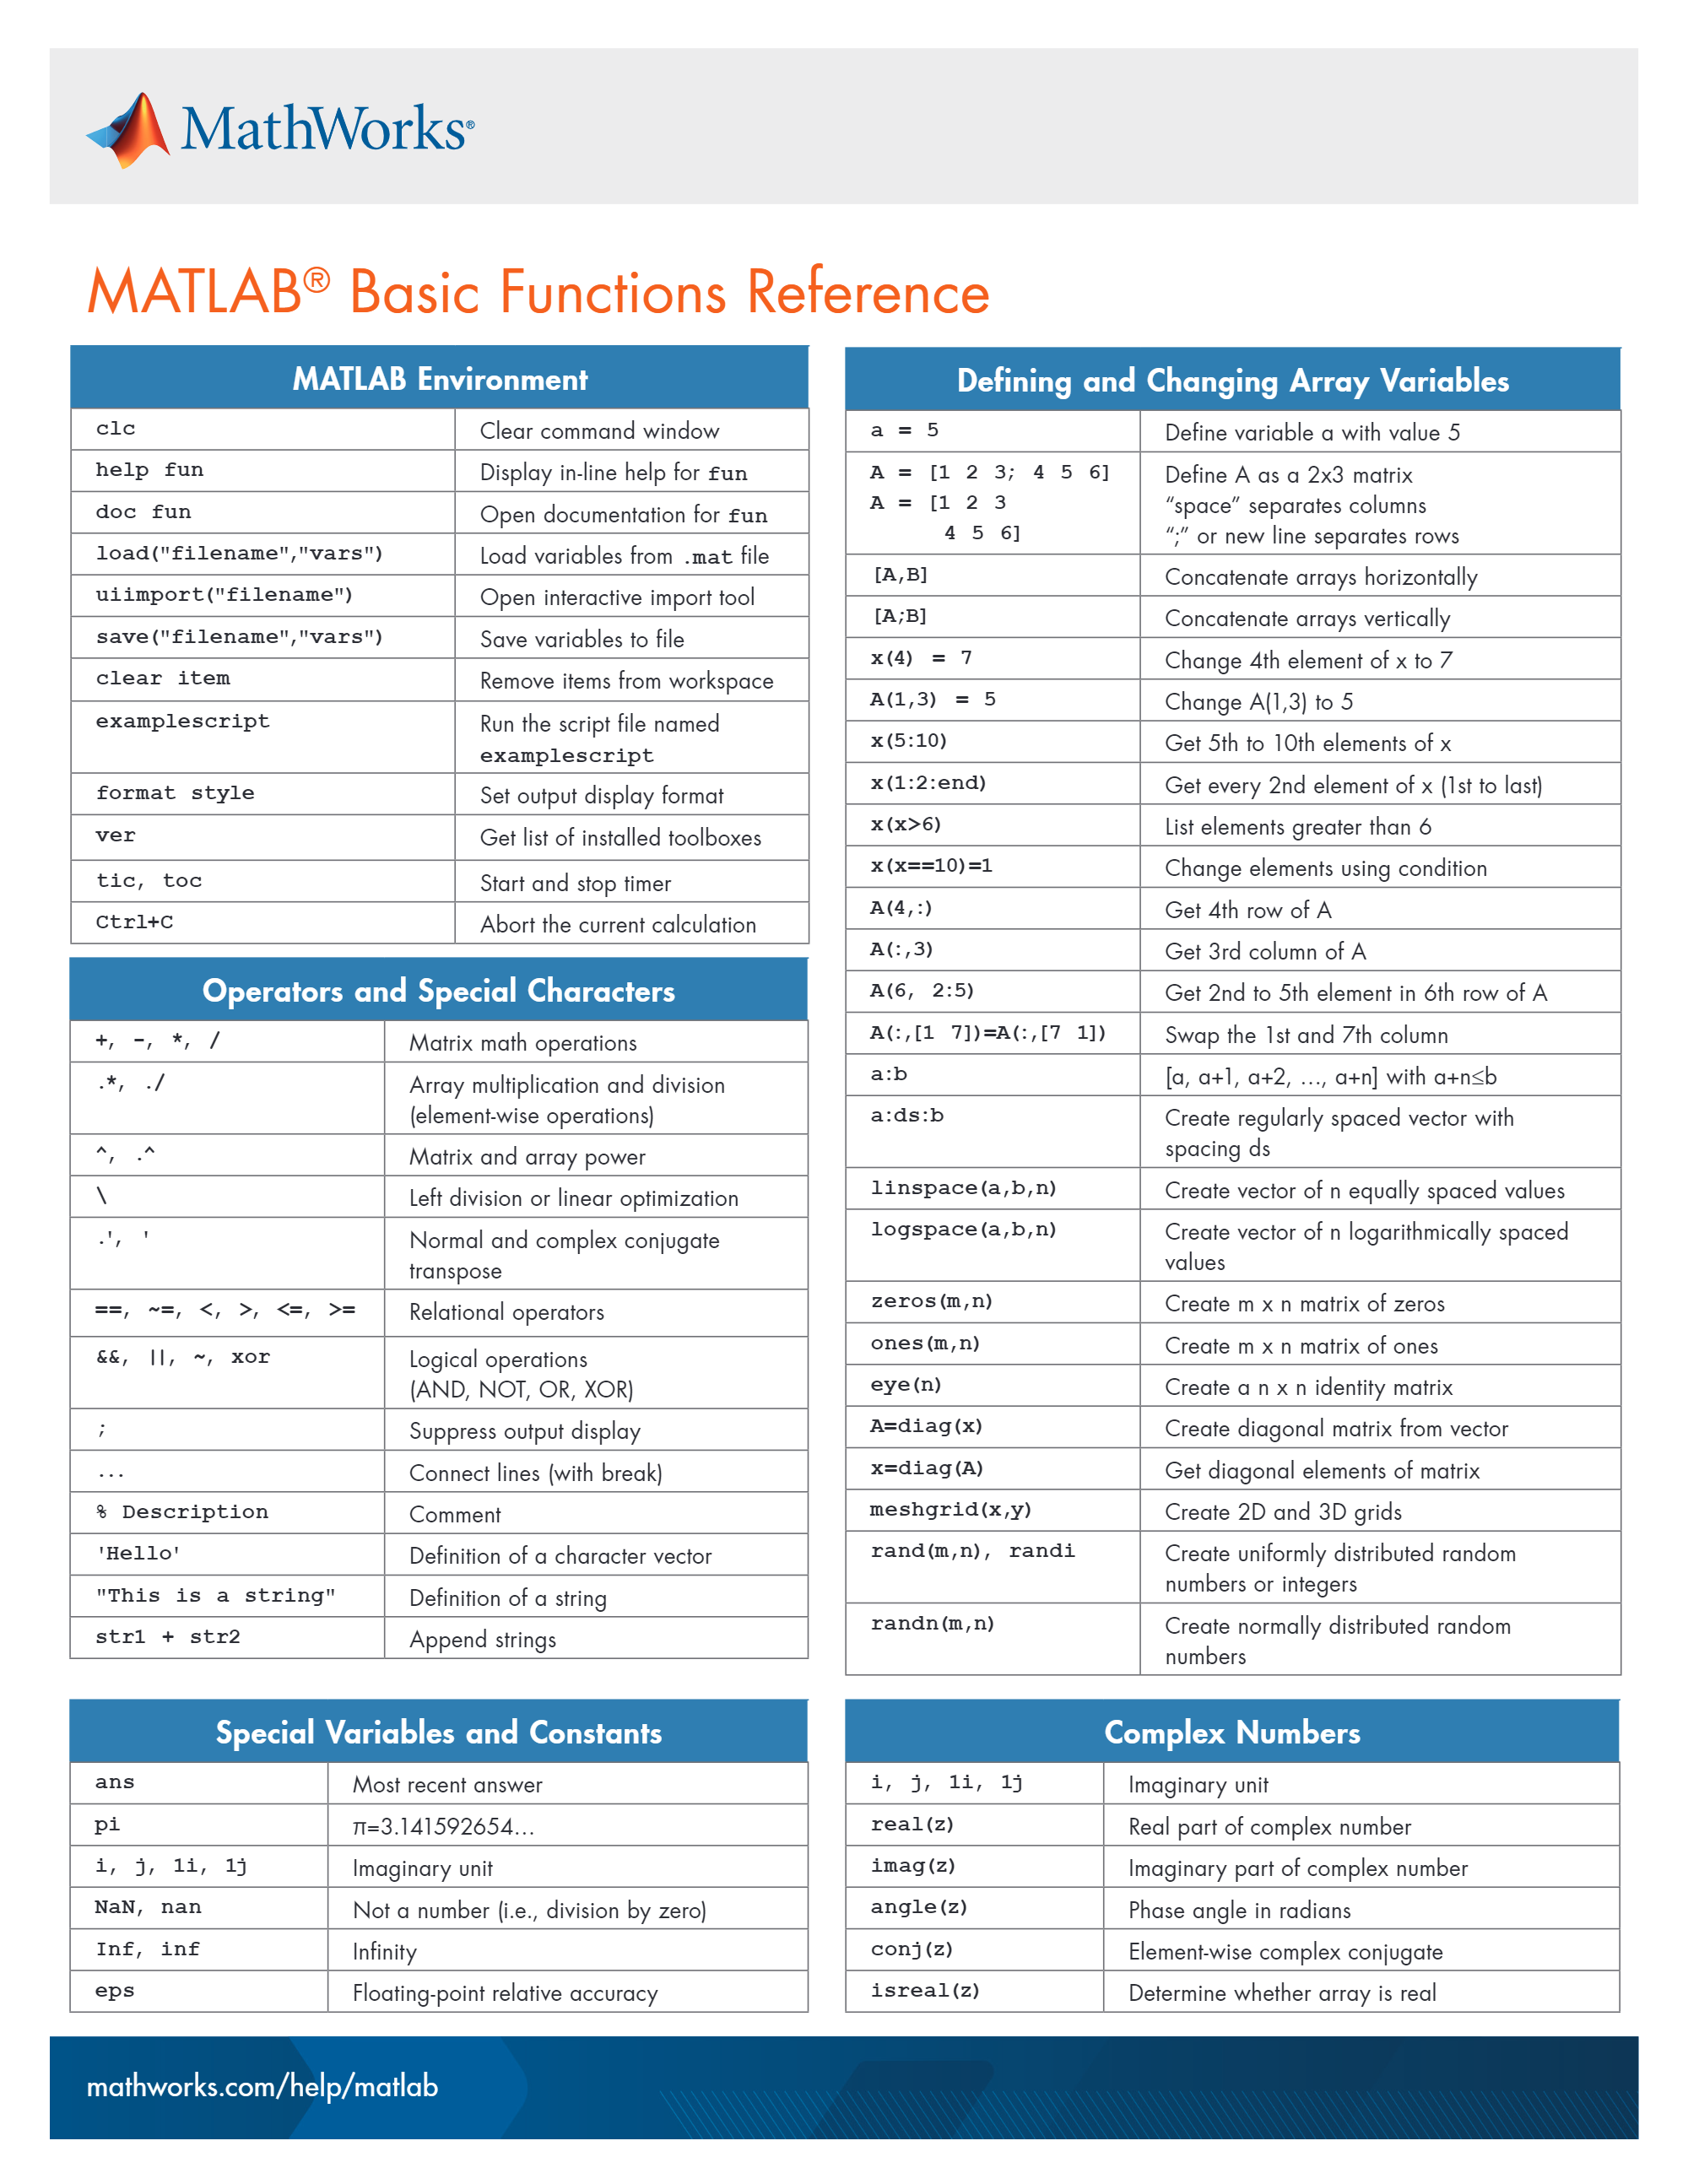 MATLAB Basic Functions